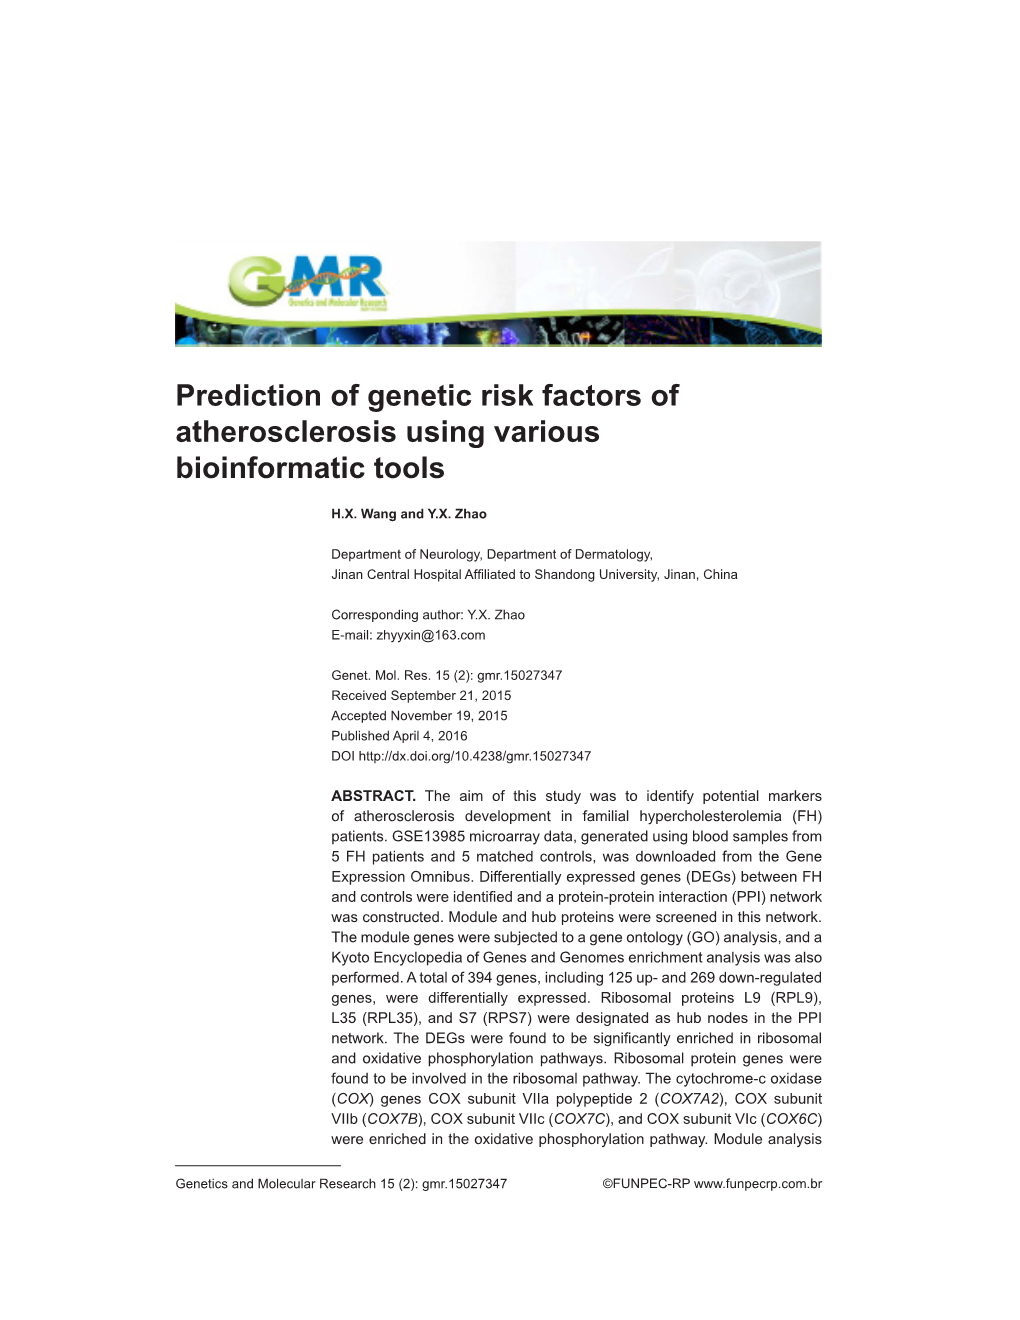 Prediction of Genetic Risk Factors of Atherosclerosis Using Various Bioinformatic Tools